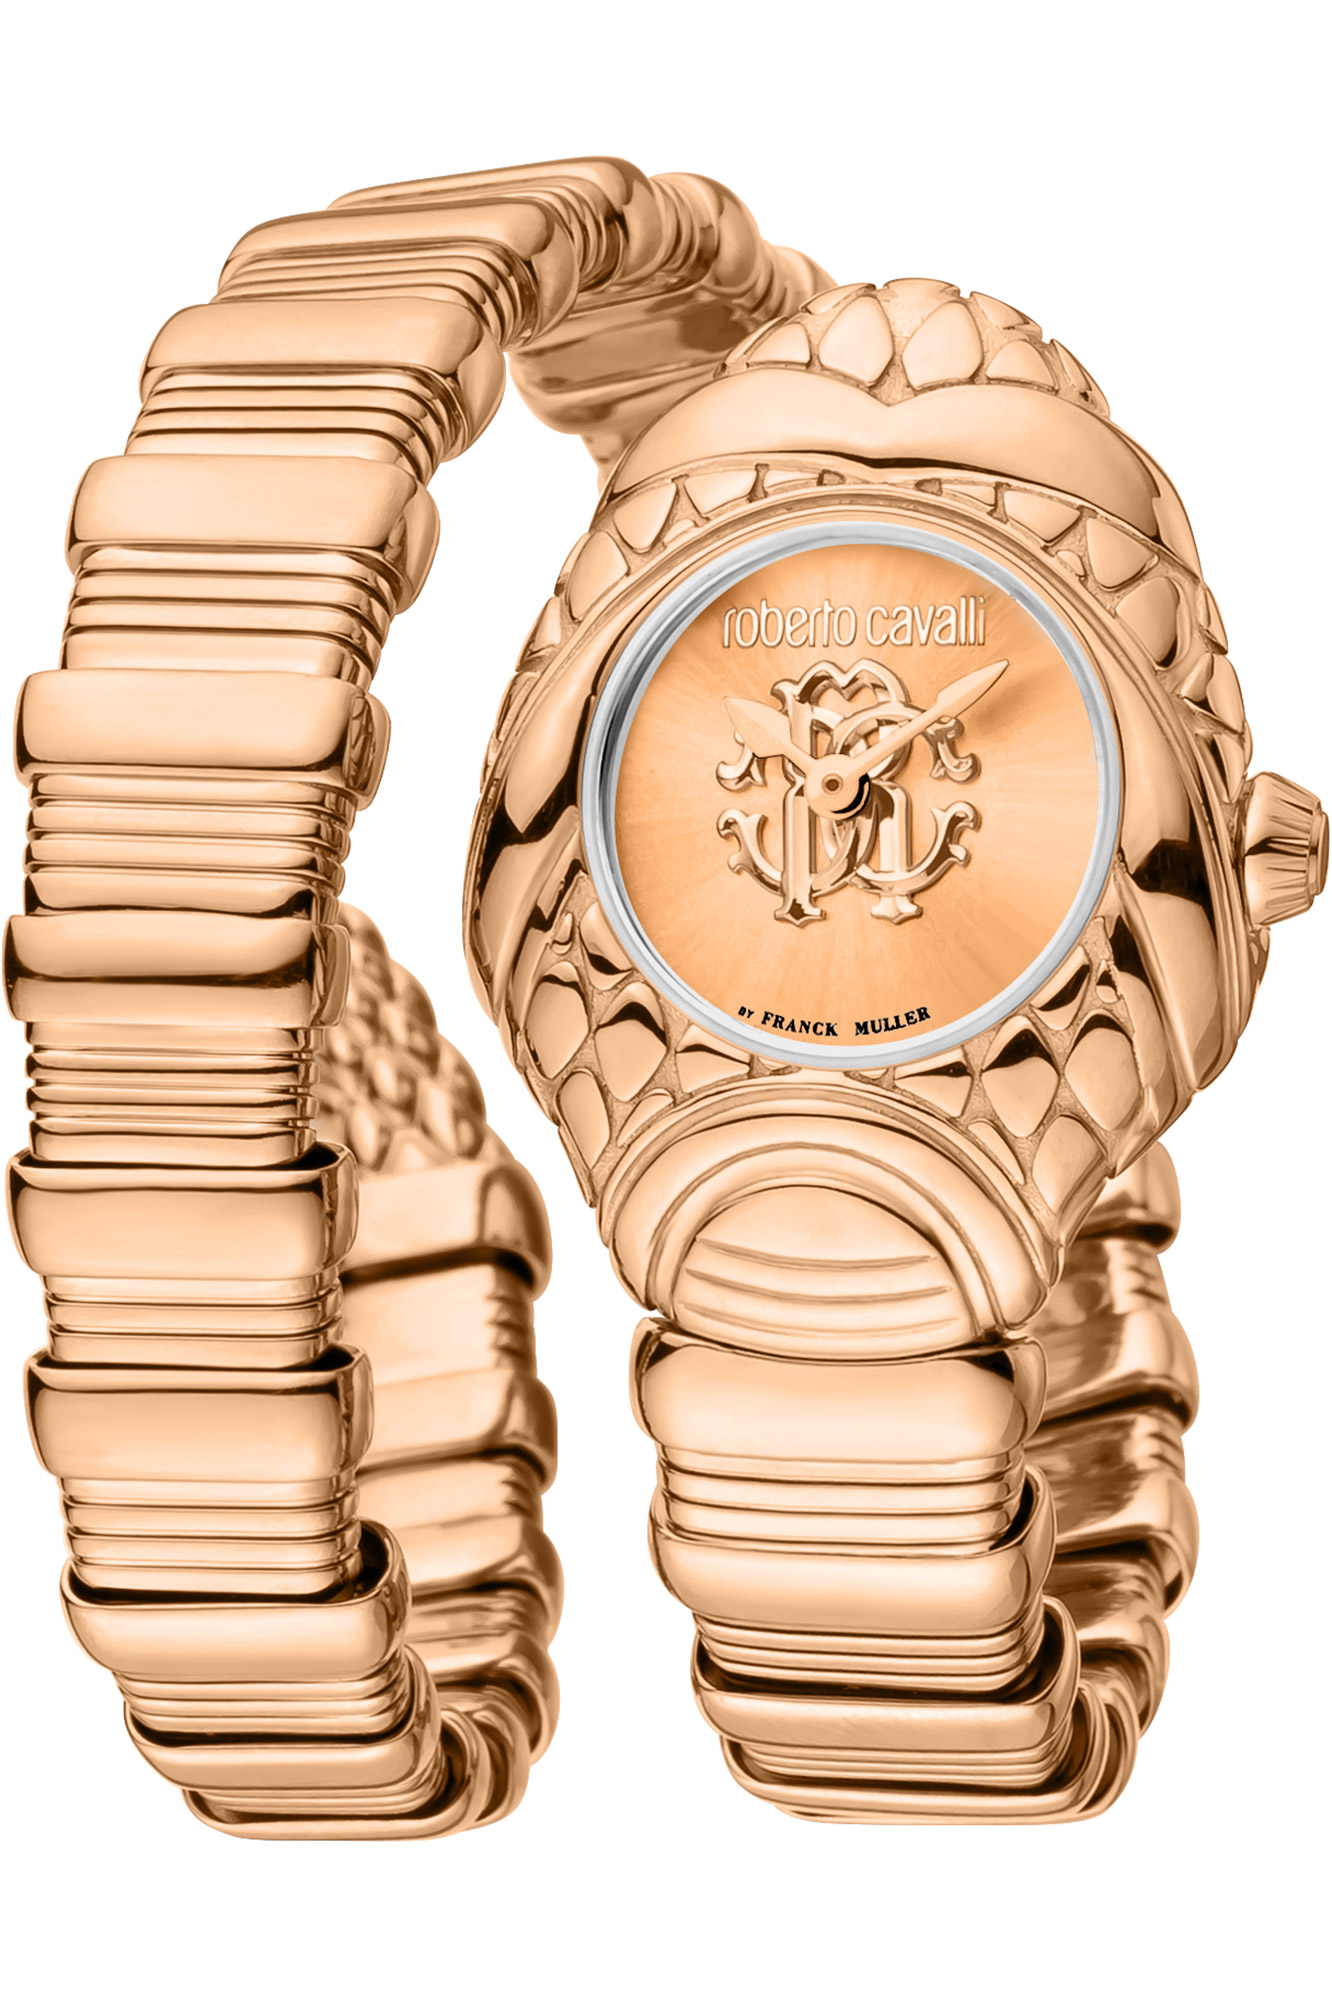 Reloj Roberto Cavalli by Franck Muller rv1l162m0041